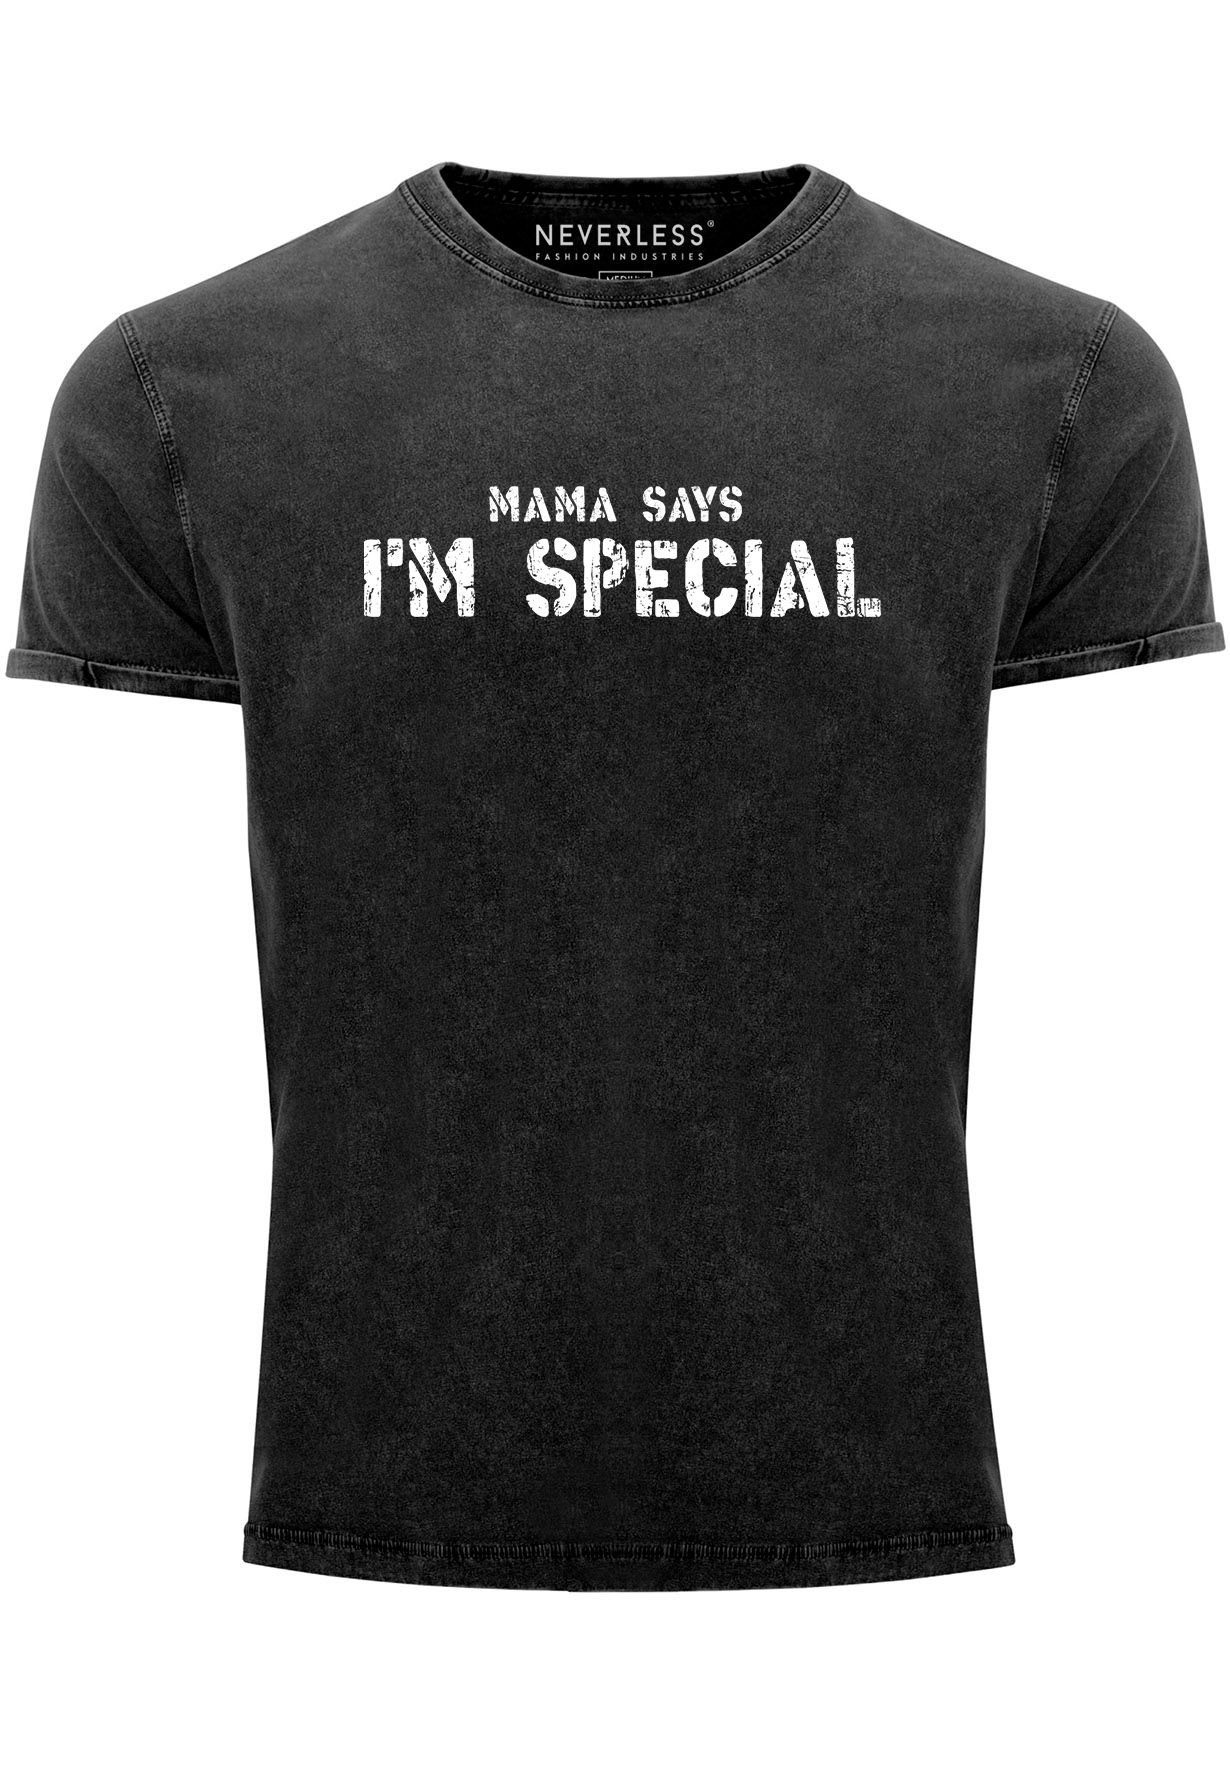 Special Shirt Mama Herren Shirt Says Print Am I Vintage Spruch Print-Shirt Neverless mit lustig Ironie